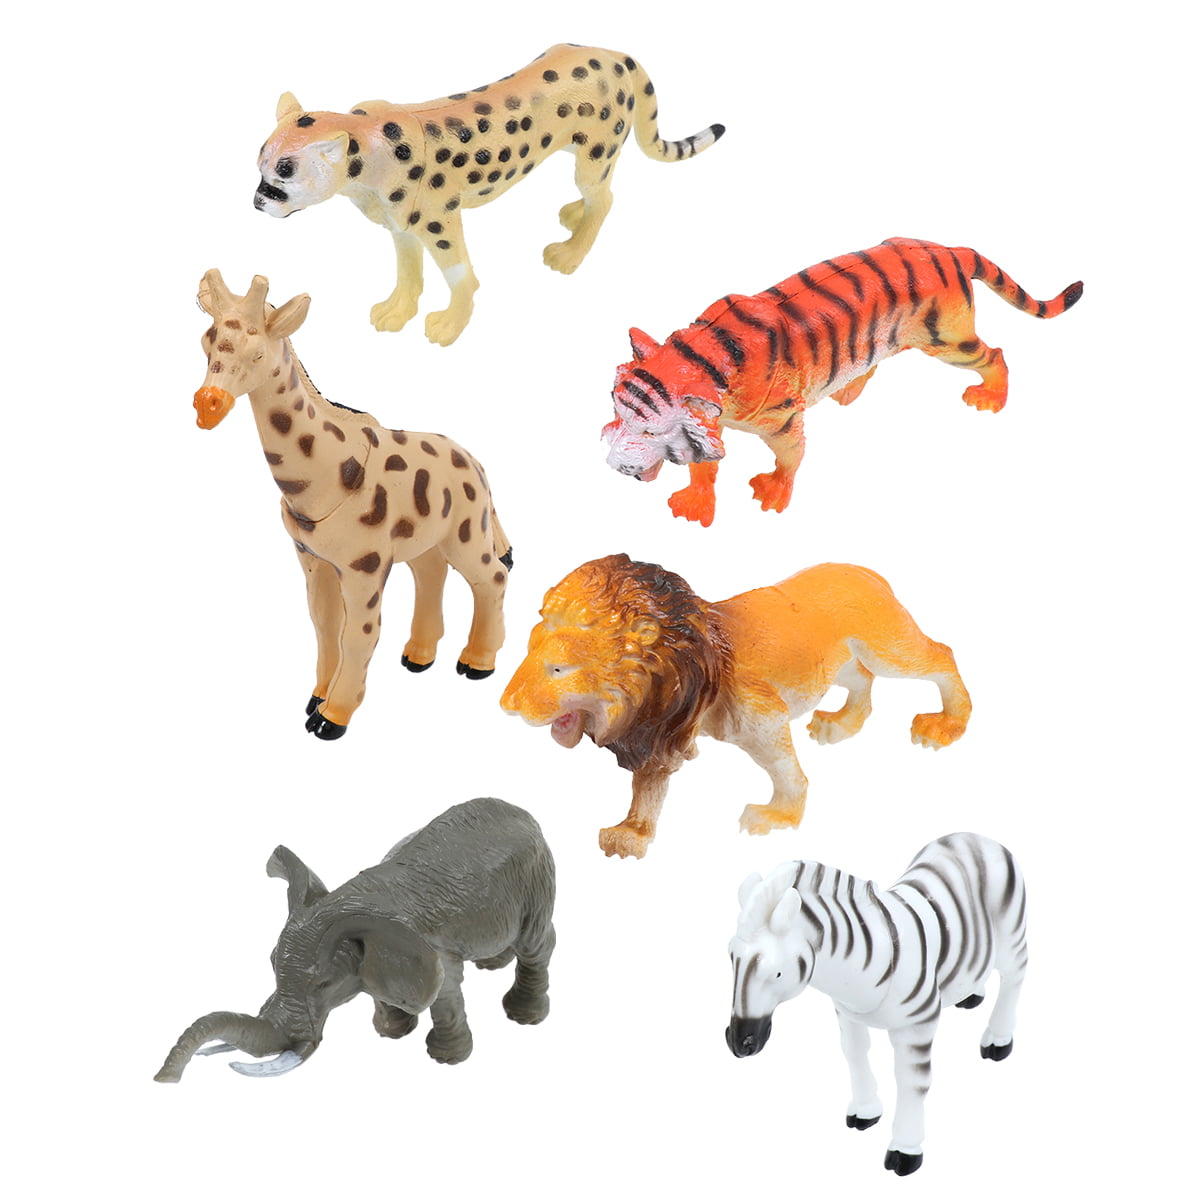 Mojo GIRAFFE MALE Wild zoo animals play model figure toys plastic forest jungle 